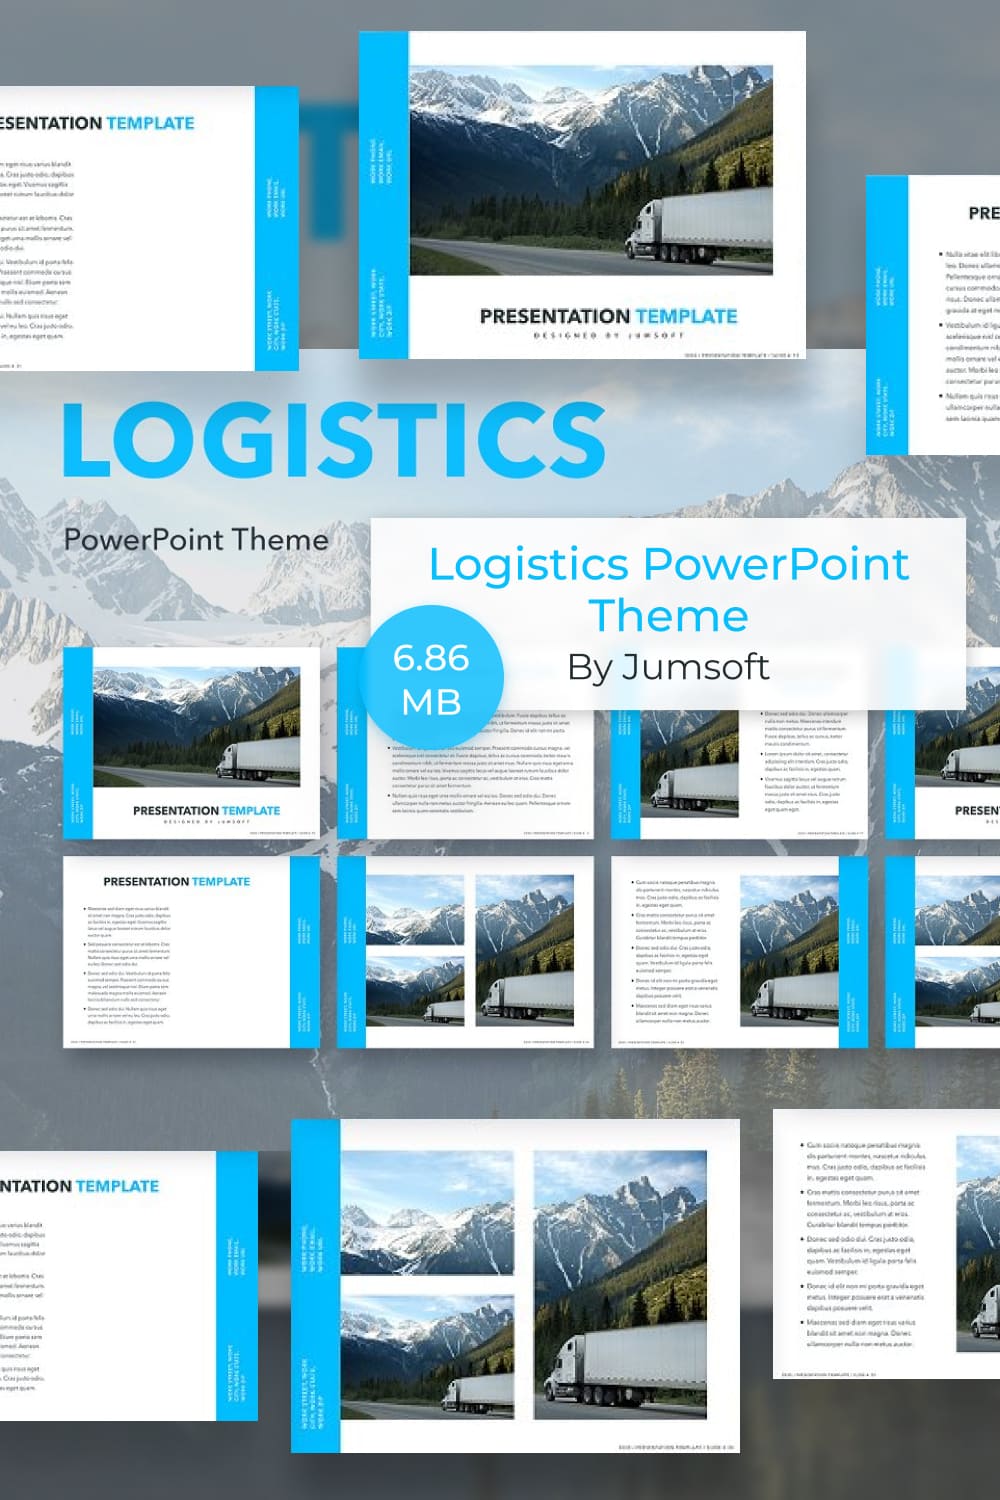 Logistics PowerPoint Theme by MasterBundles Pinterest Collage Image.